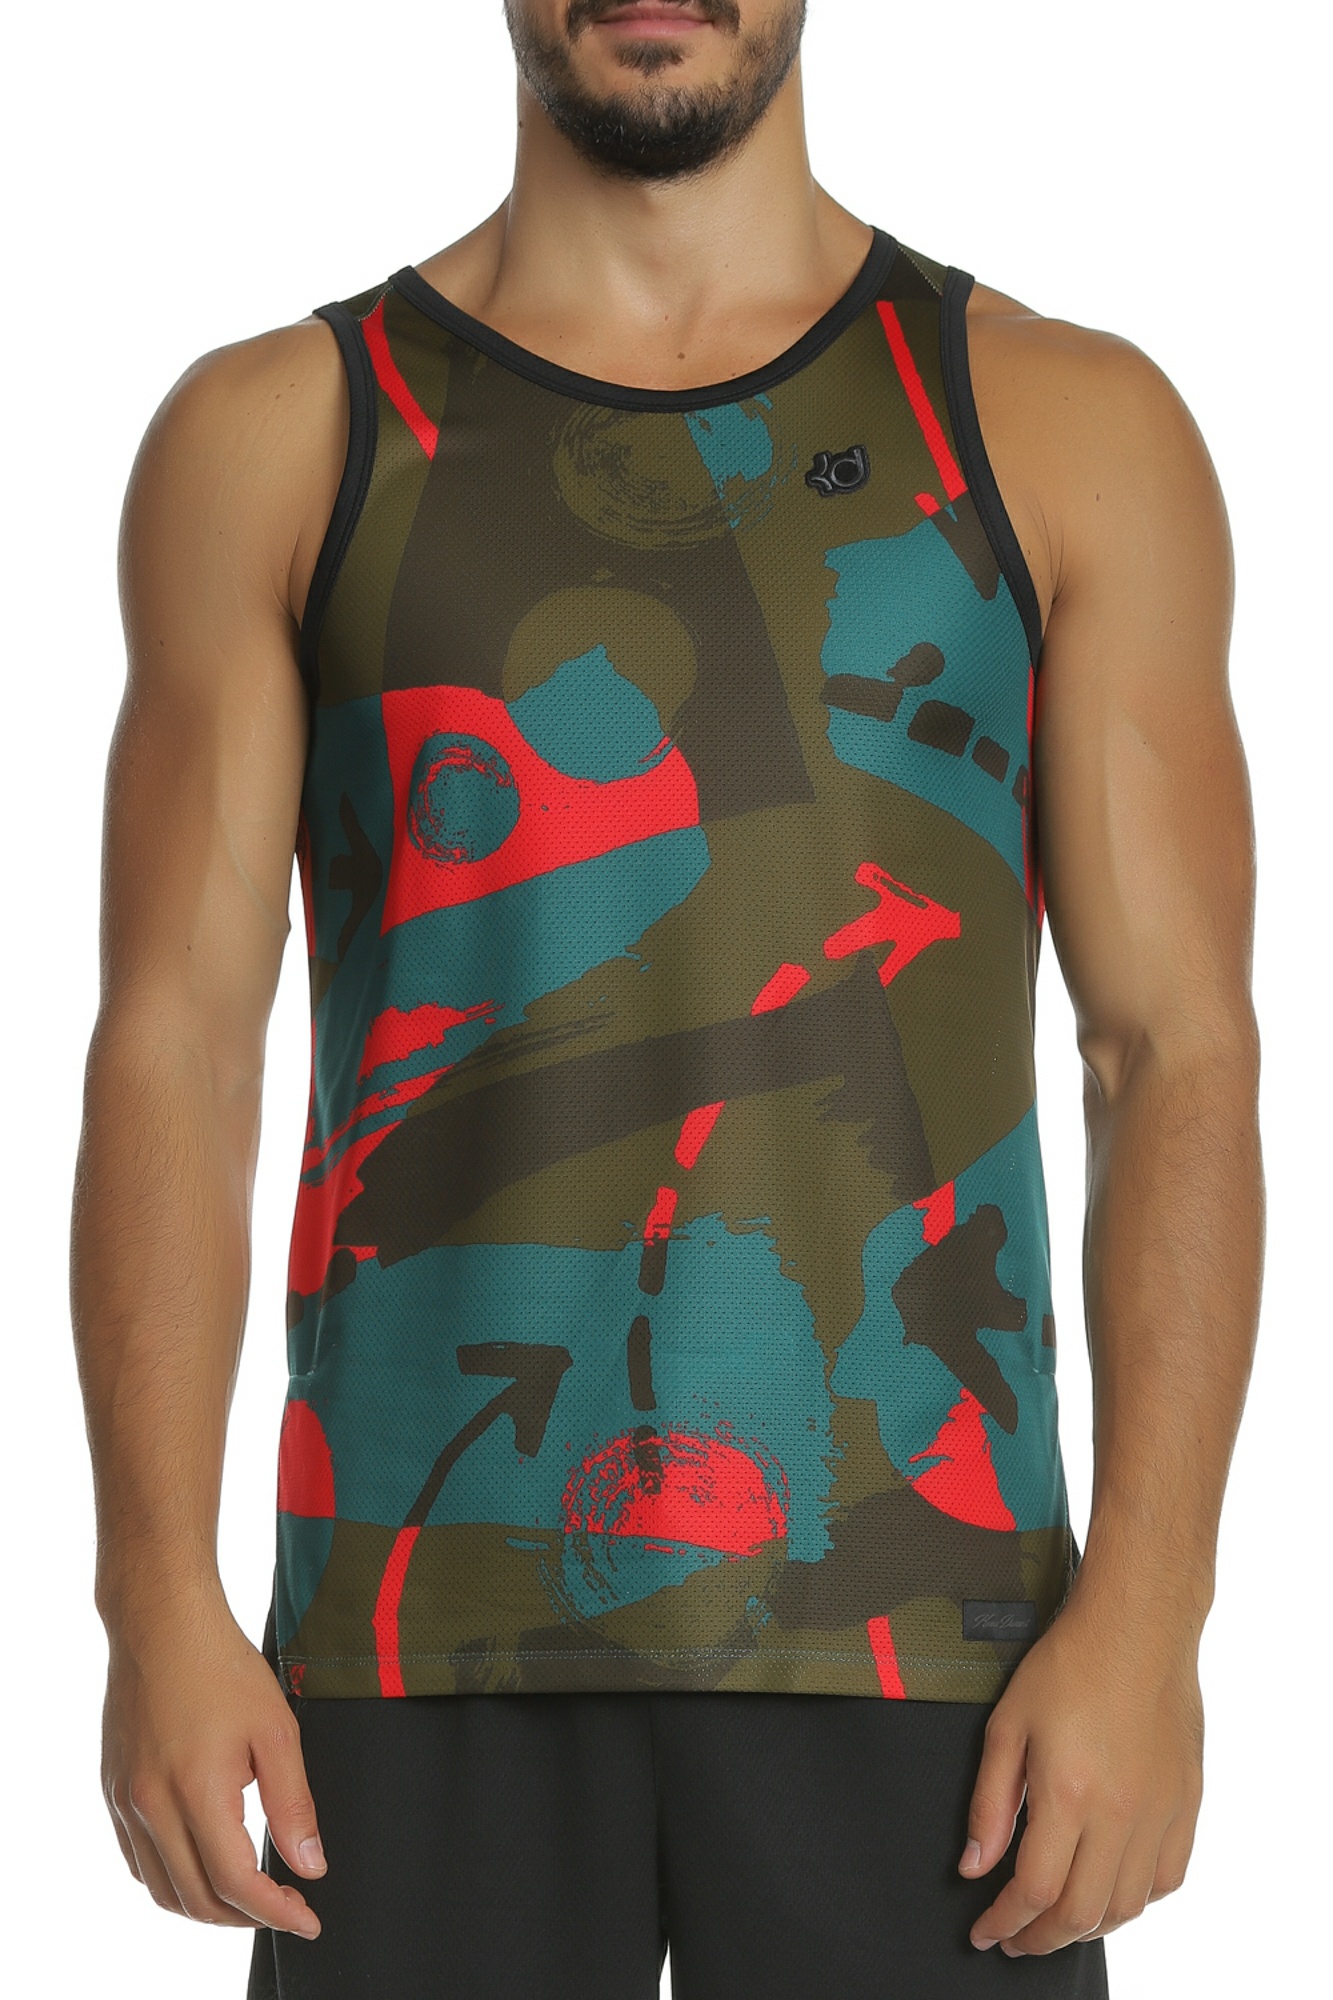 NIKE - Ανδρική μπλούζα KEVIN DURANT HYPERELITE χακί Ανδρικά/Ρούχα/Αθλητικά/T-shirt